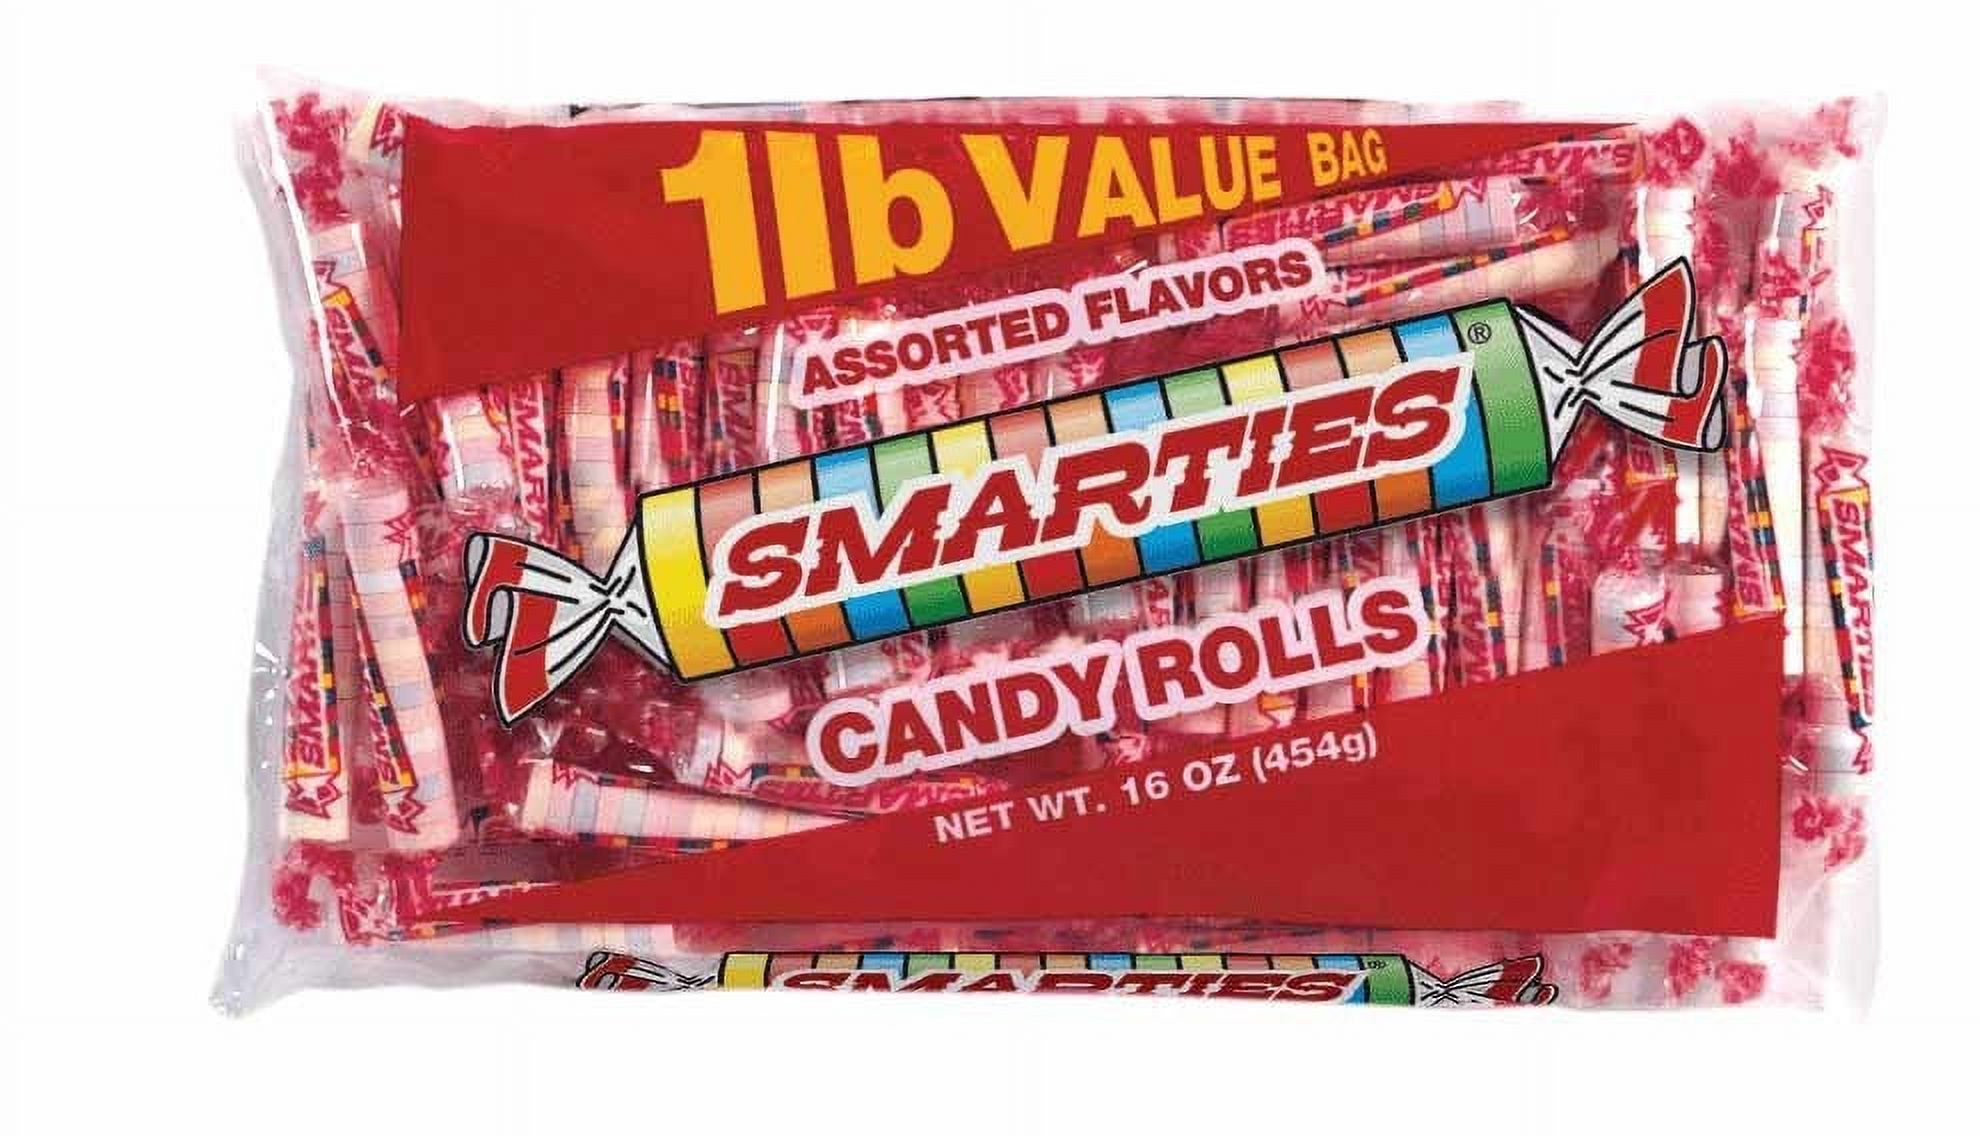 Smarties Original Candy Rolls, 1 lb - image 1 of 2